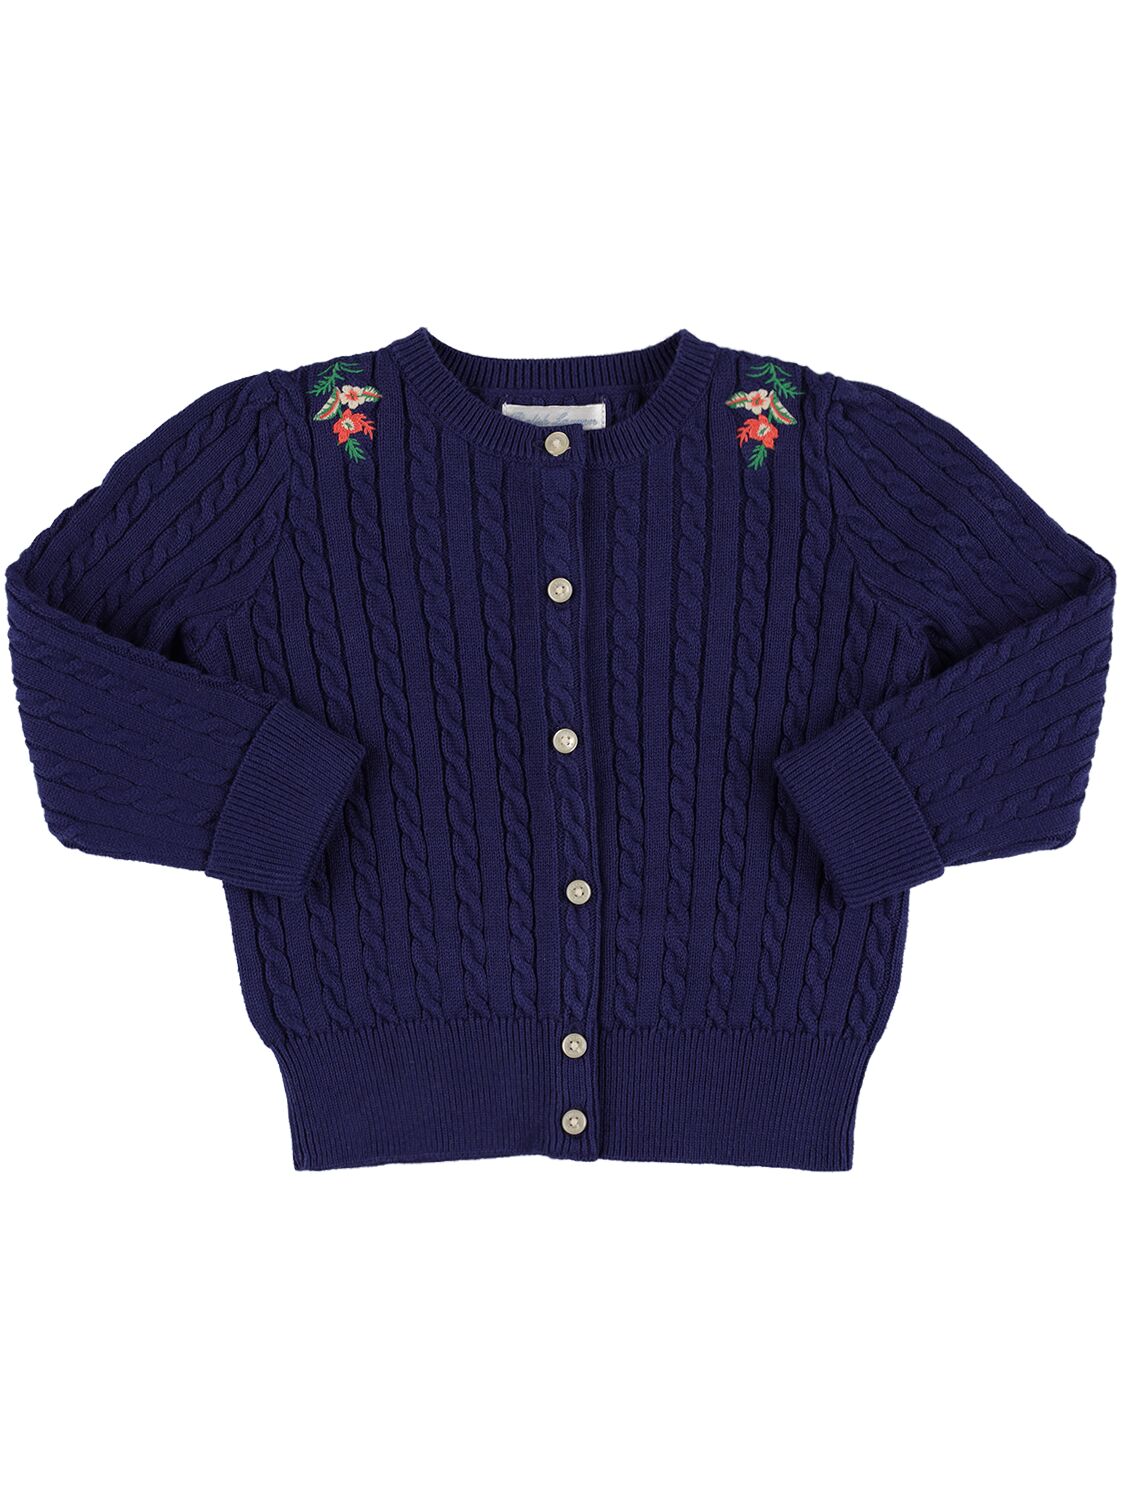 Ralph Lauren Babies' Cotton Knit Cardigan